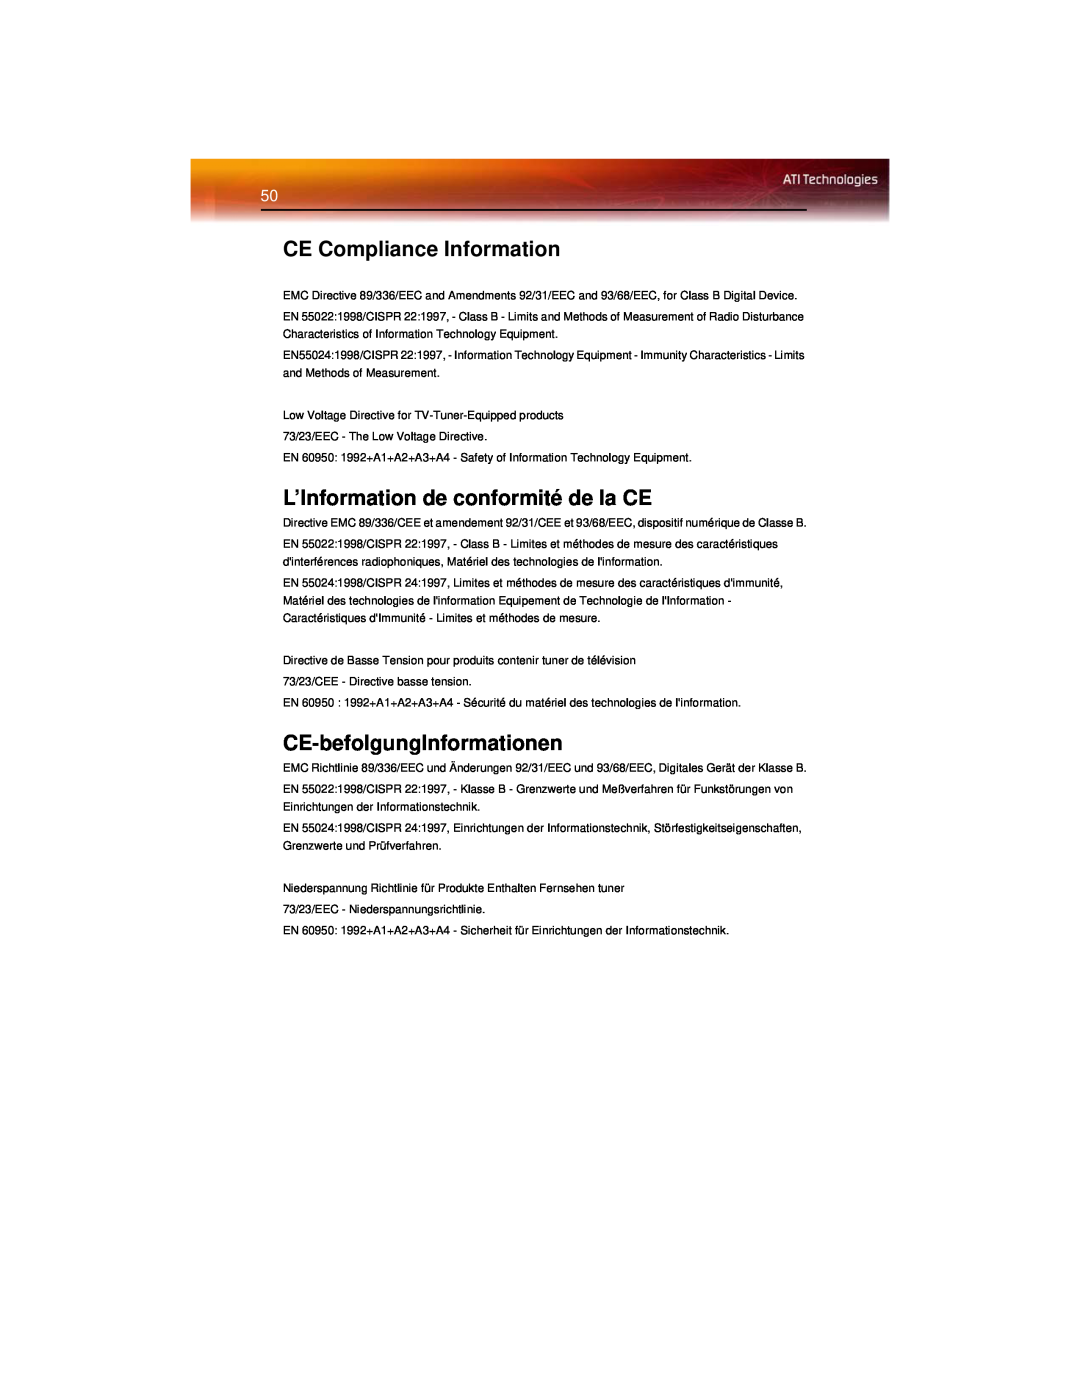 ATI Technologies X600 manual CE Compliance Information, L’Information de conformité de la CE, CE-befolgungInformationen 